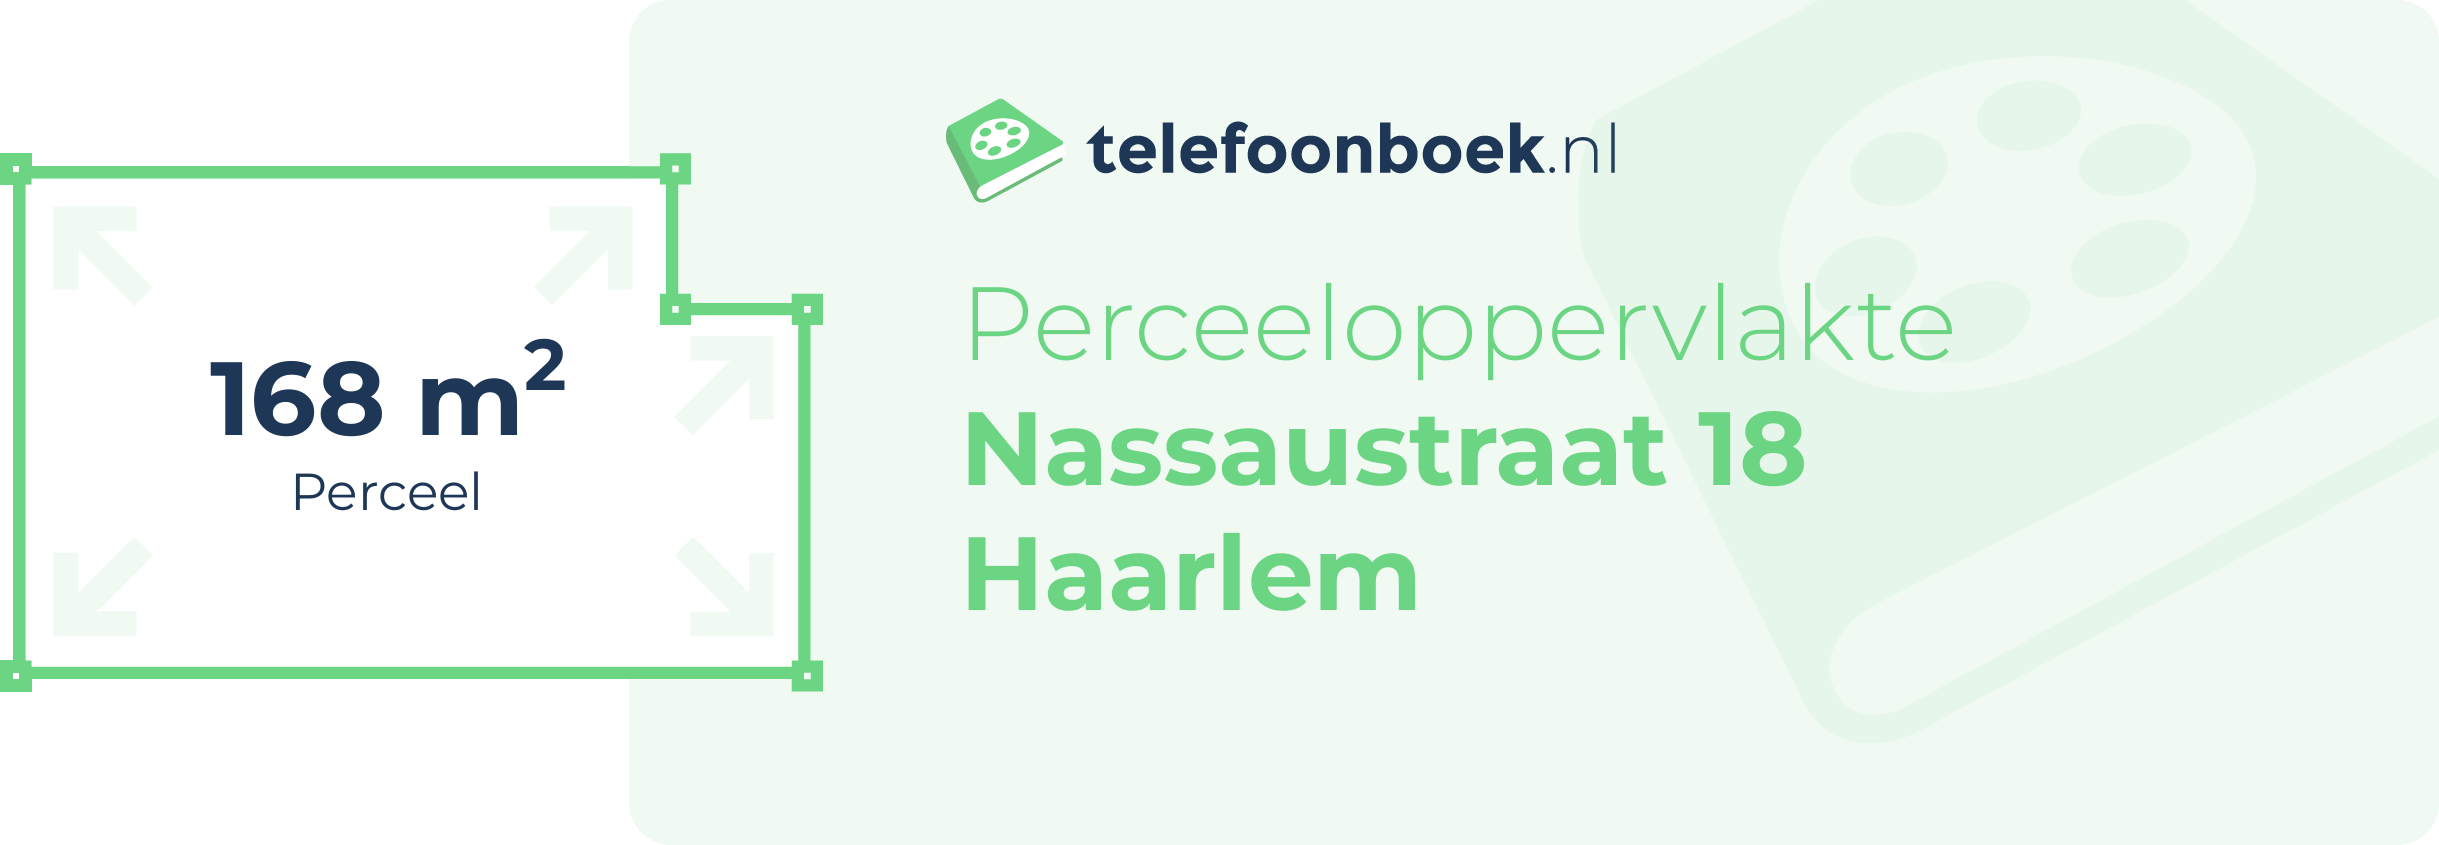 Perceeloppervlakte Nassaustraat 18 Haarlem